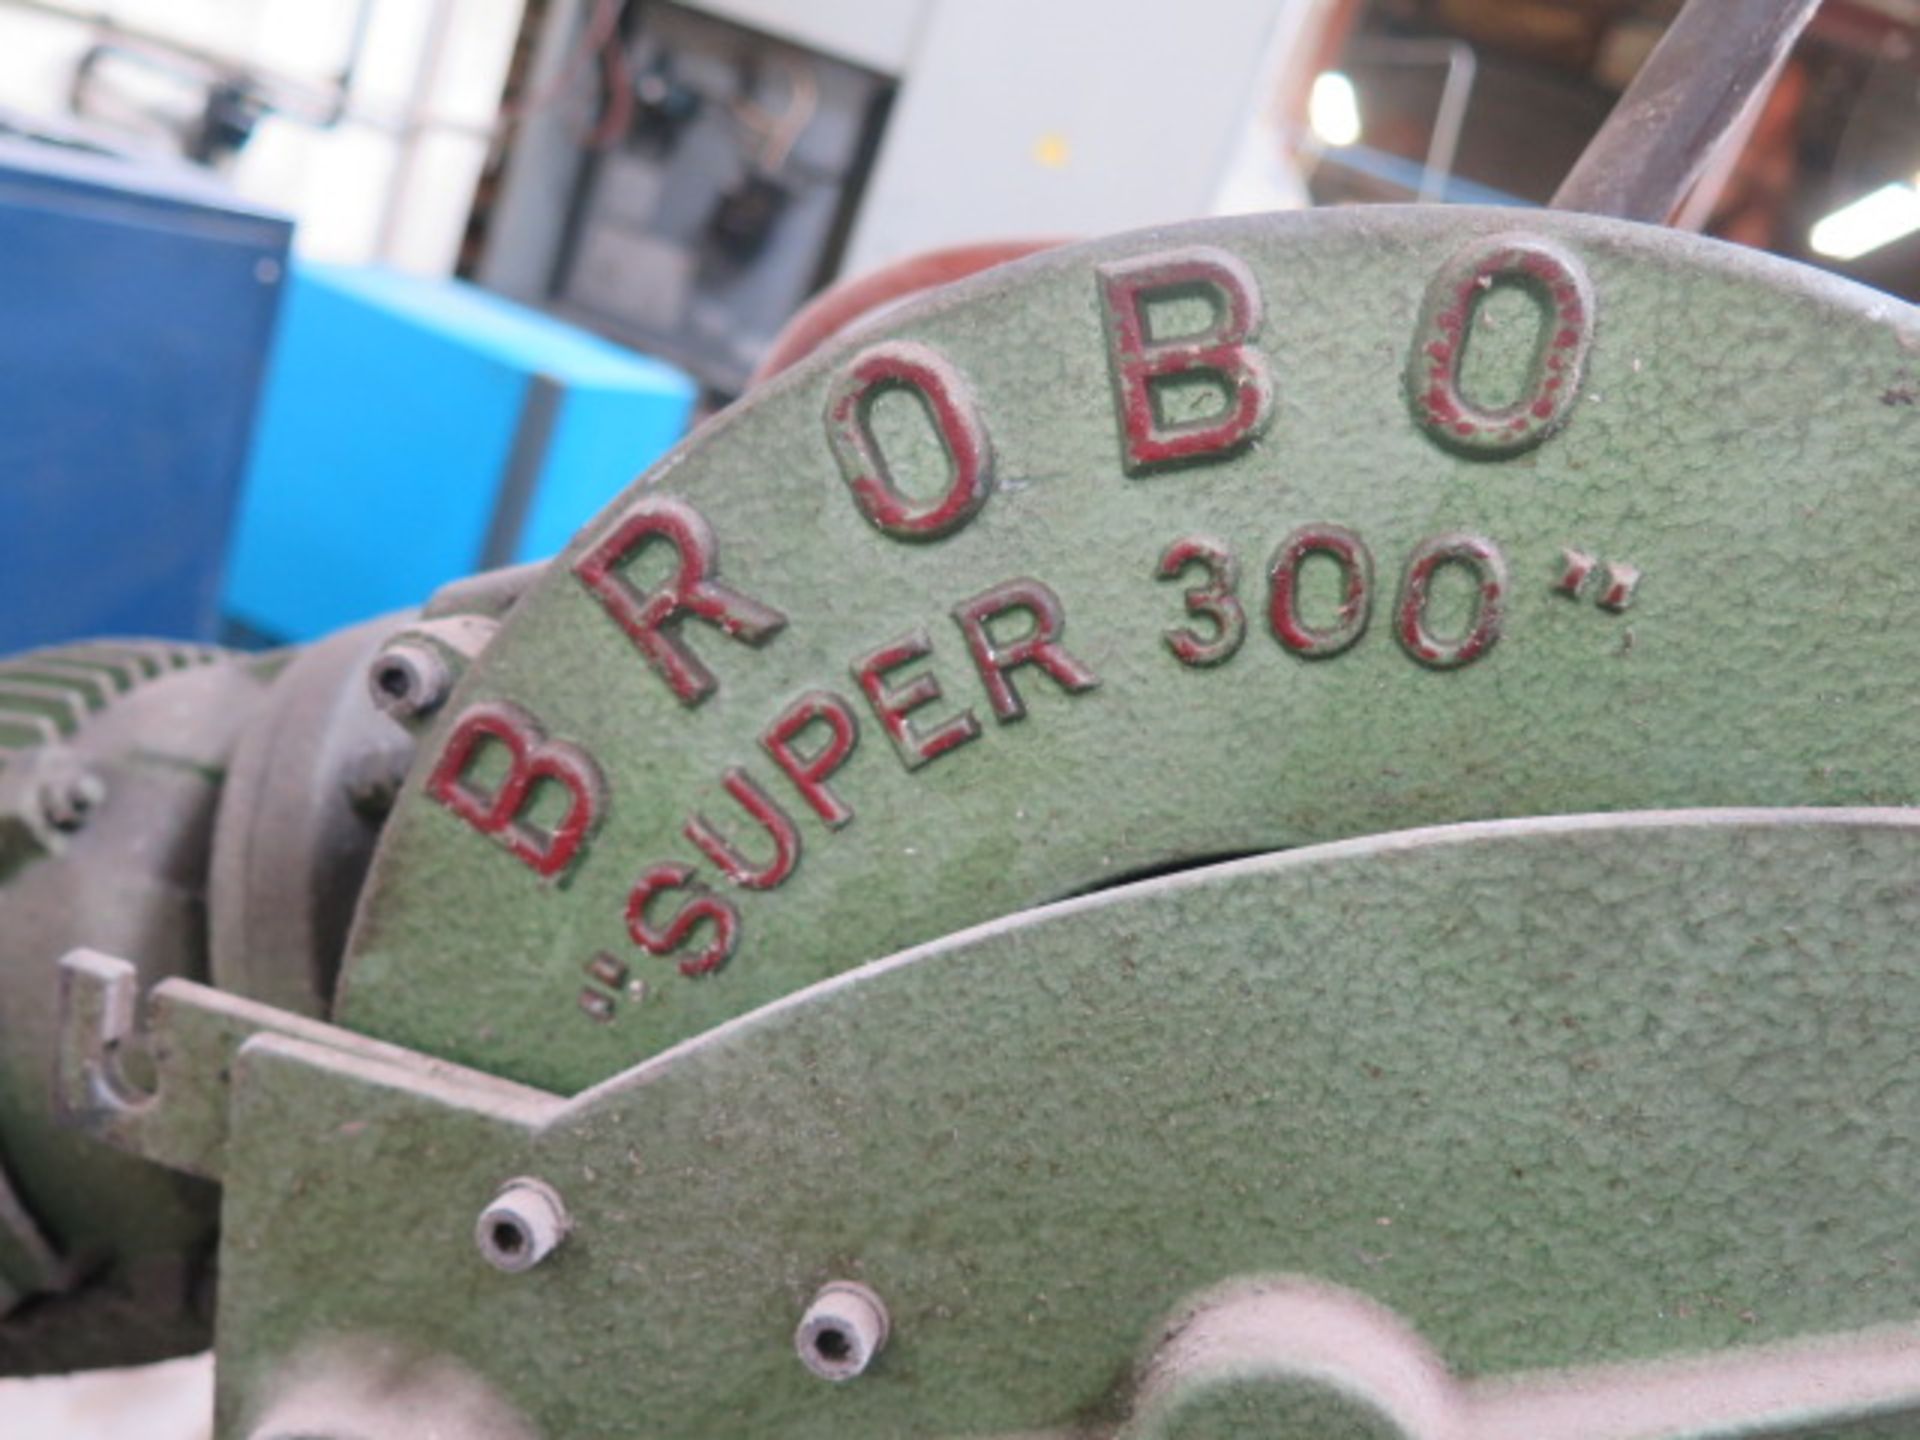 Brobo “Super-300” Miter Cold Saw w/ 2-Speeds, Coolant - Image 5 of 5